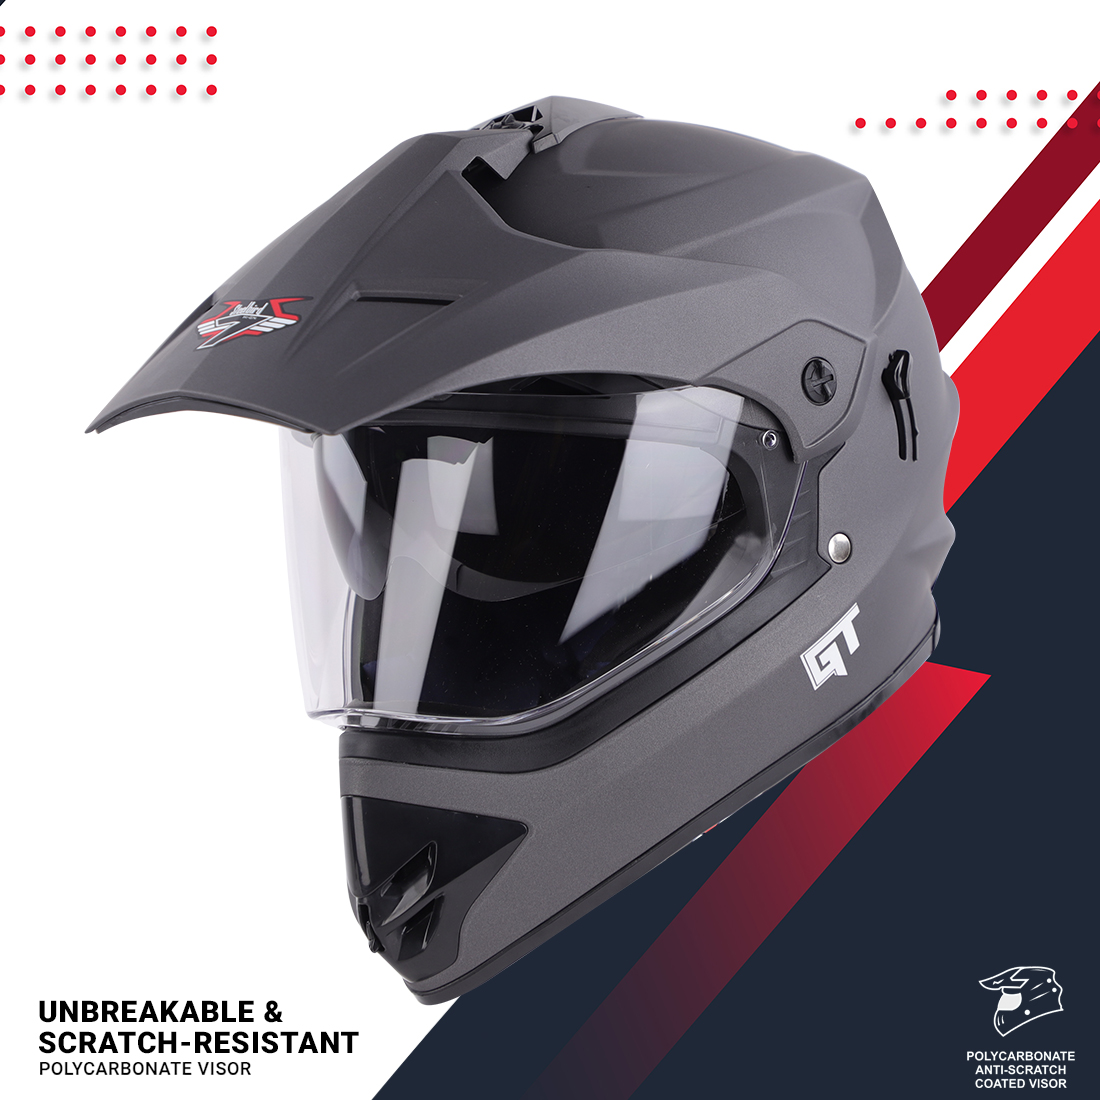 Steelbird Off Road GT ISI Certified Motocross Helmet For Men With Inner Sun Shield (Matt Axis Grey With Clear Visor)